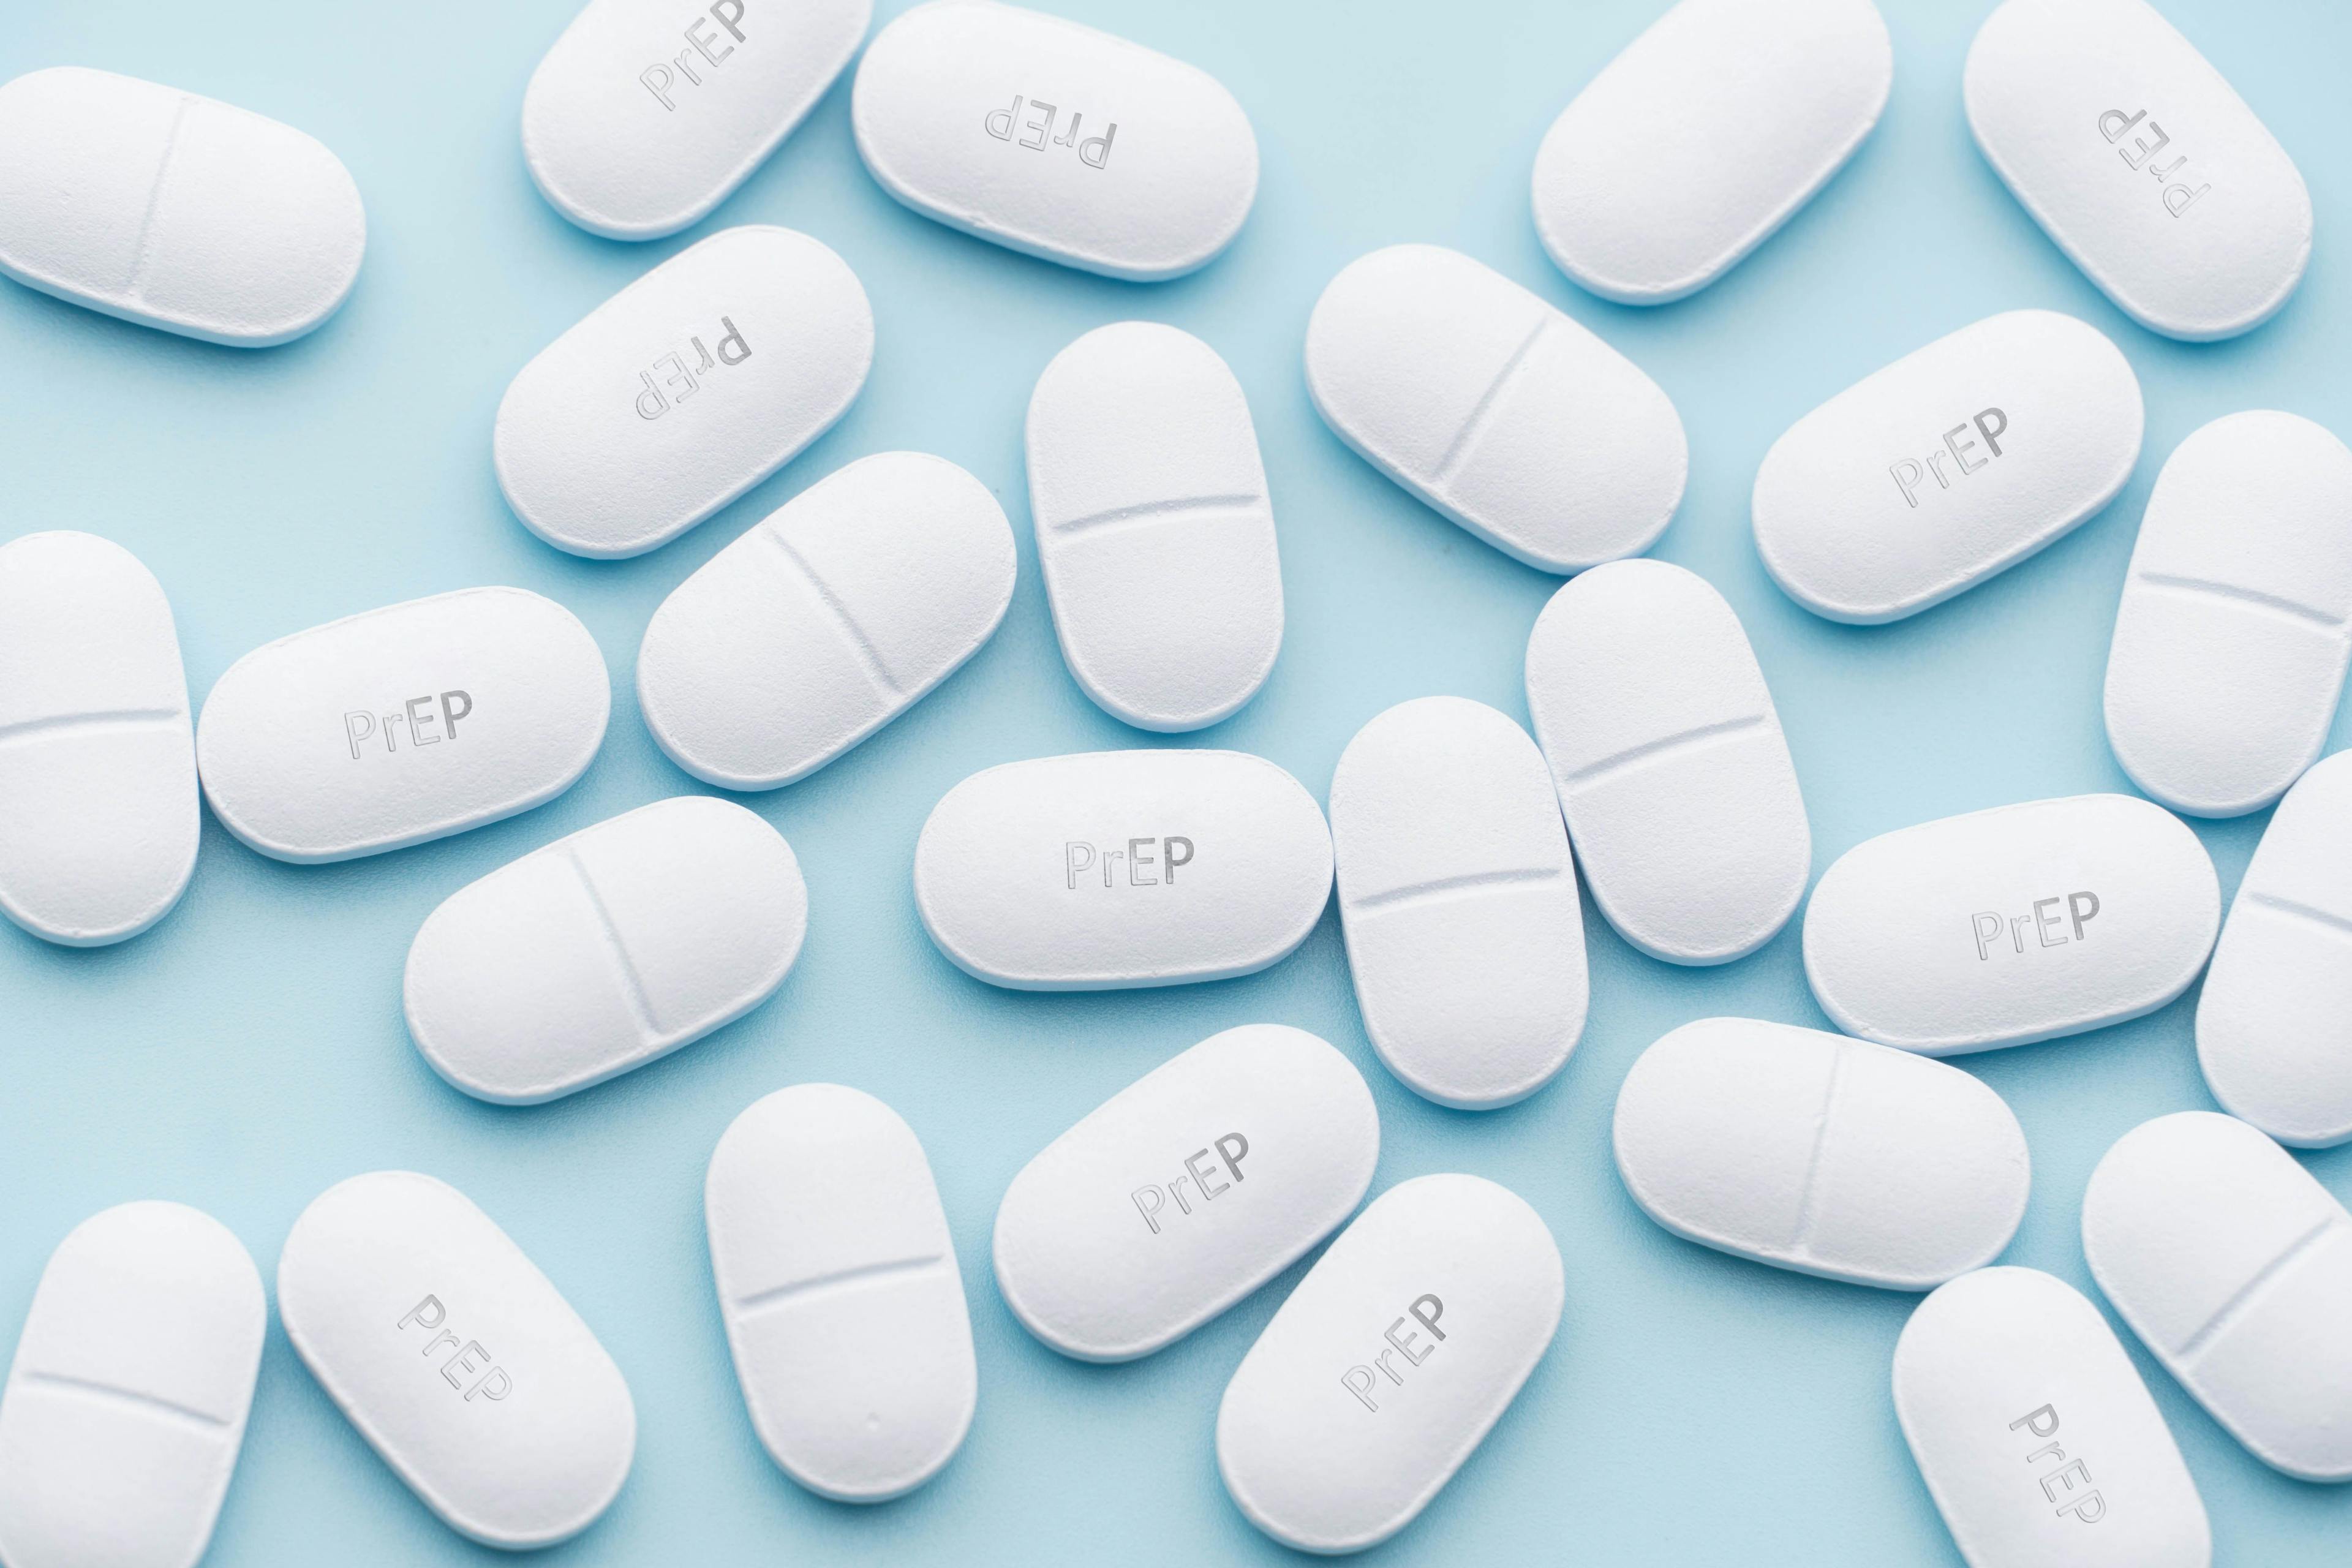 White PrEP pills | Image credit: Orawan - stock.adobe.com